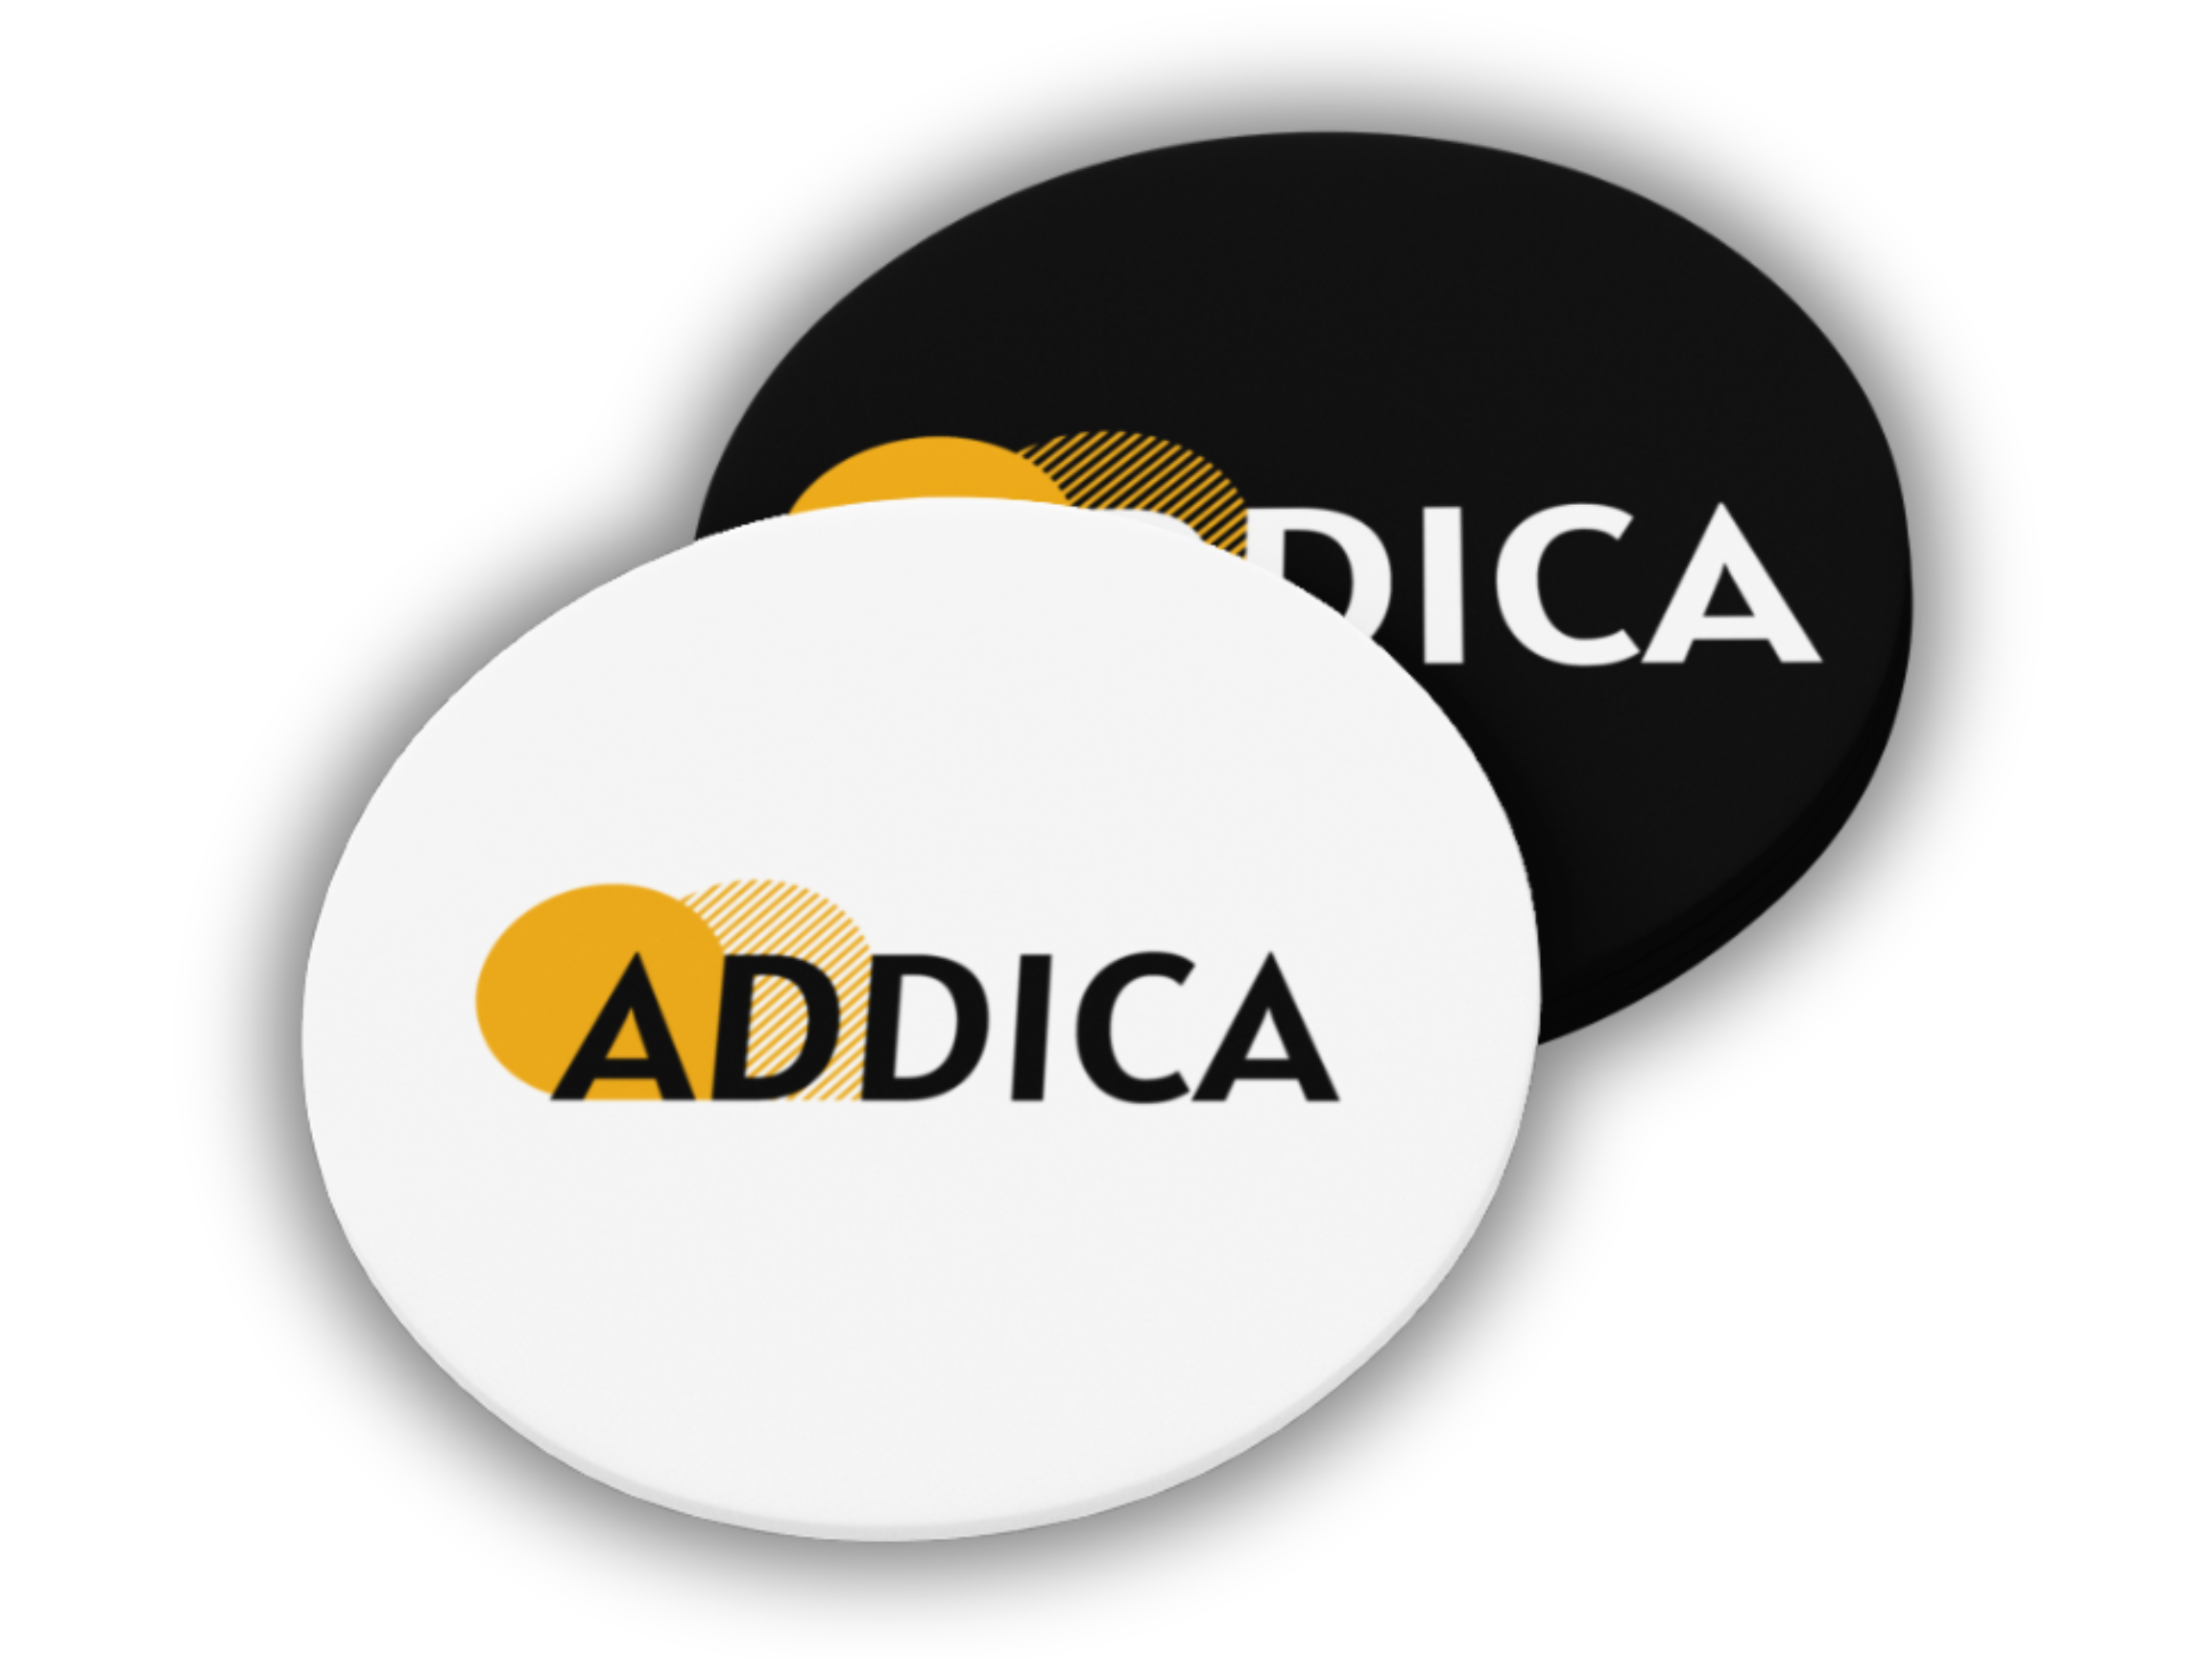 Addica Round Neoprene Custom Coasters